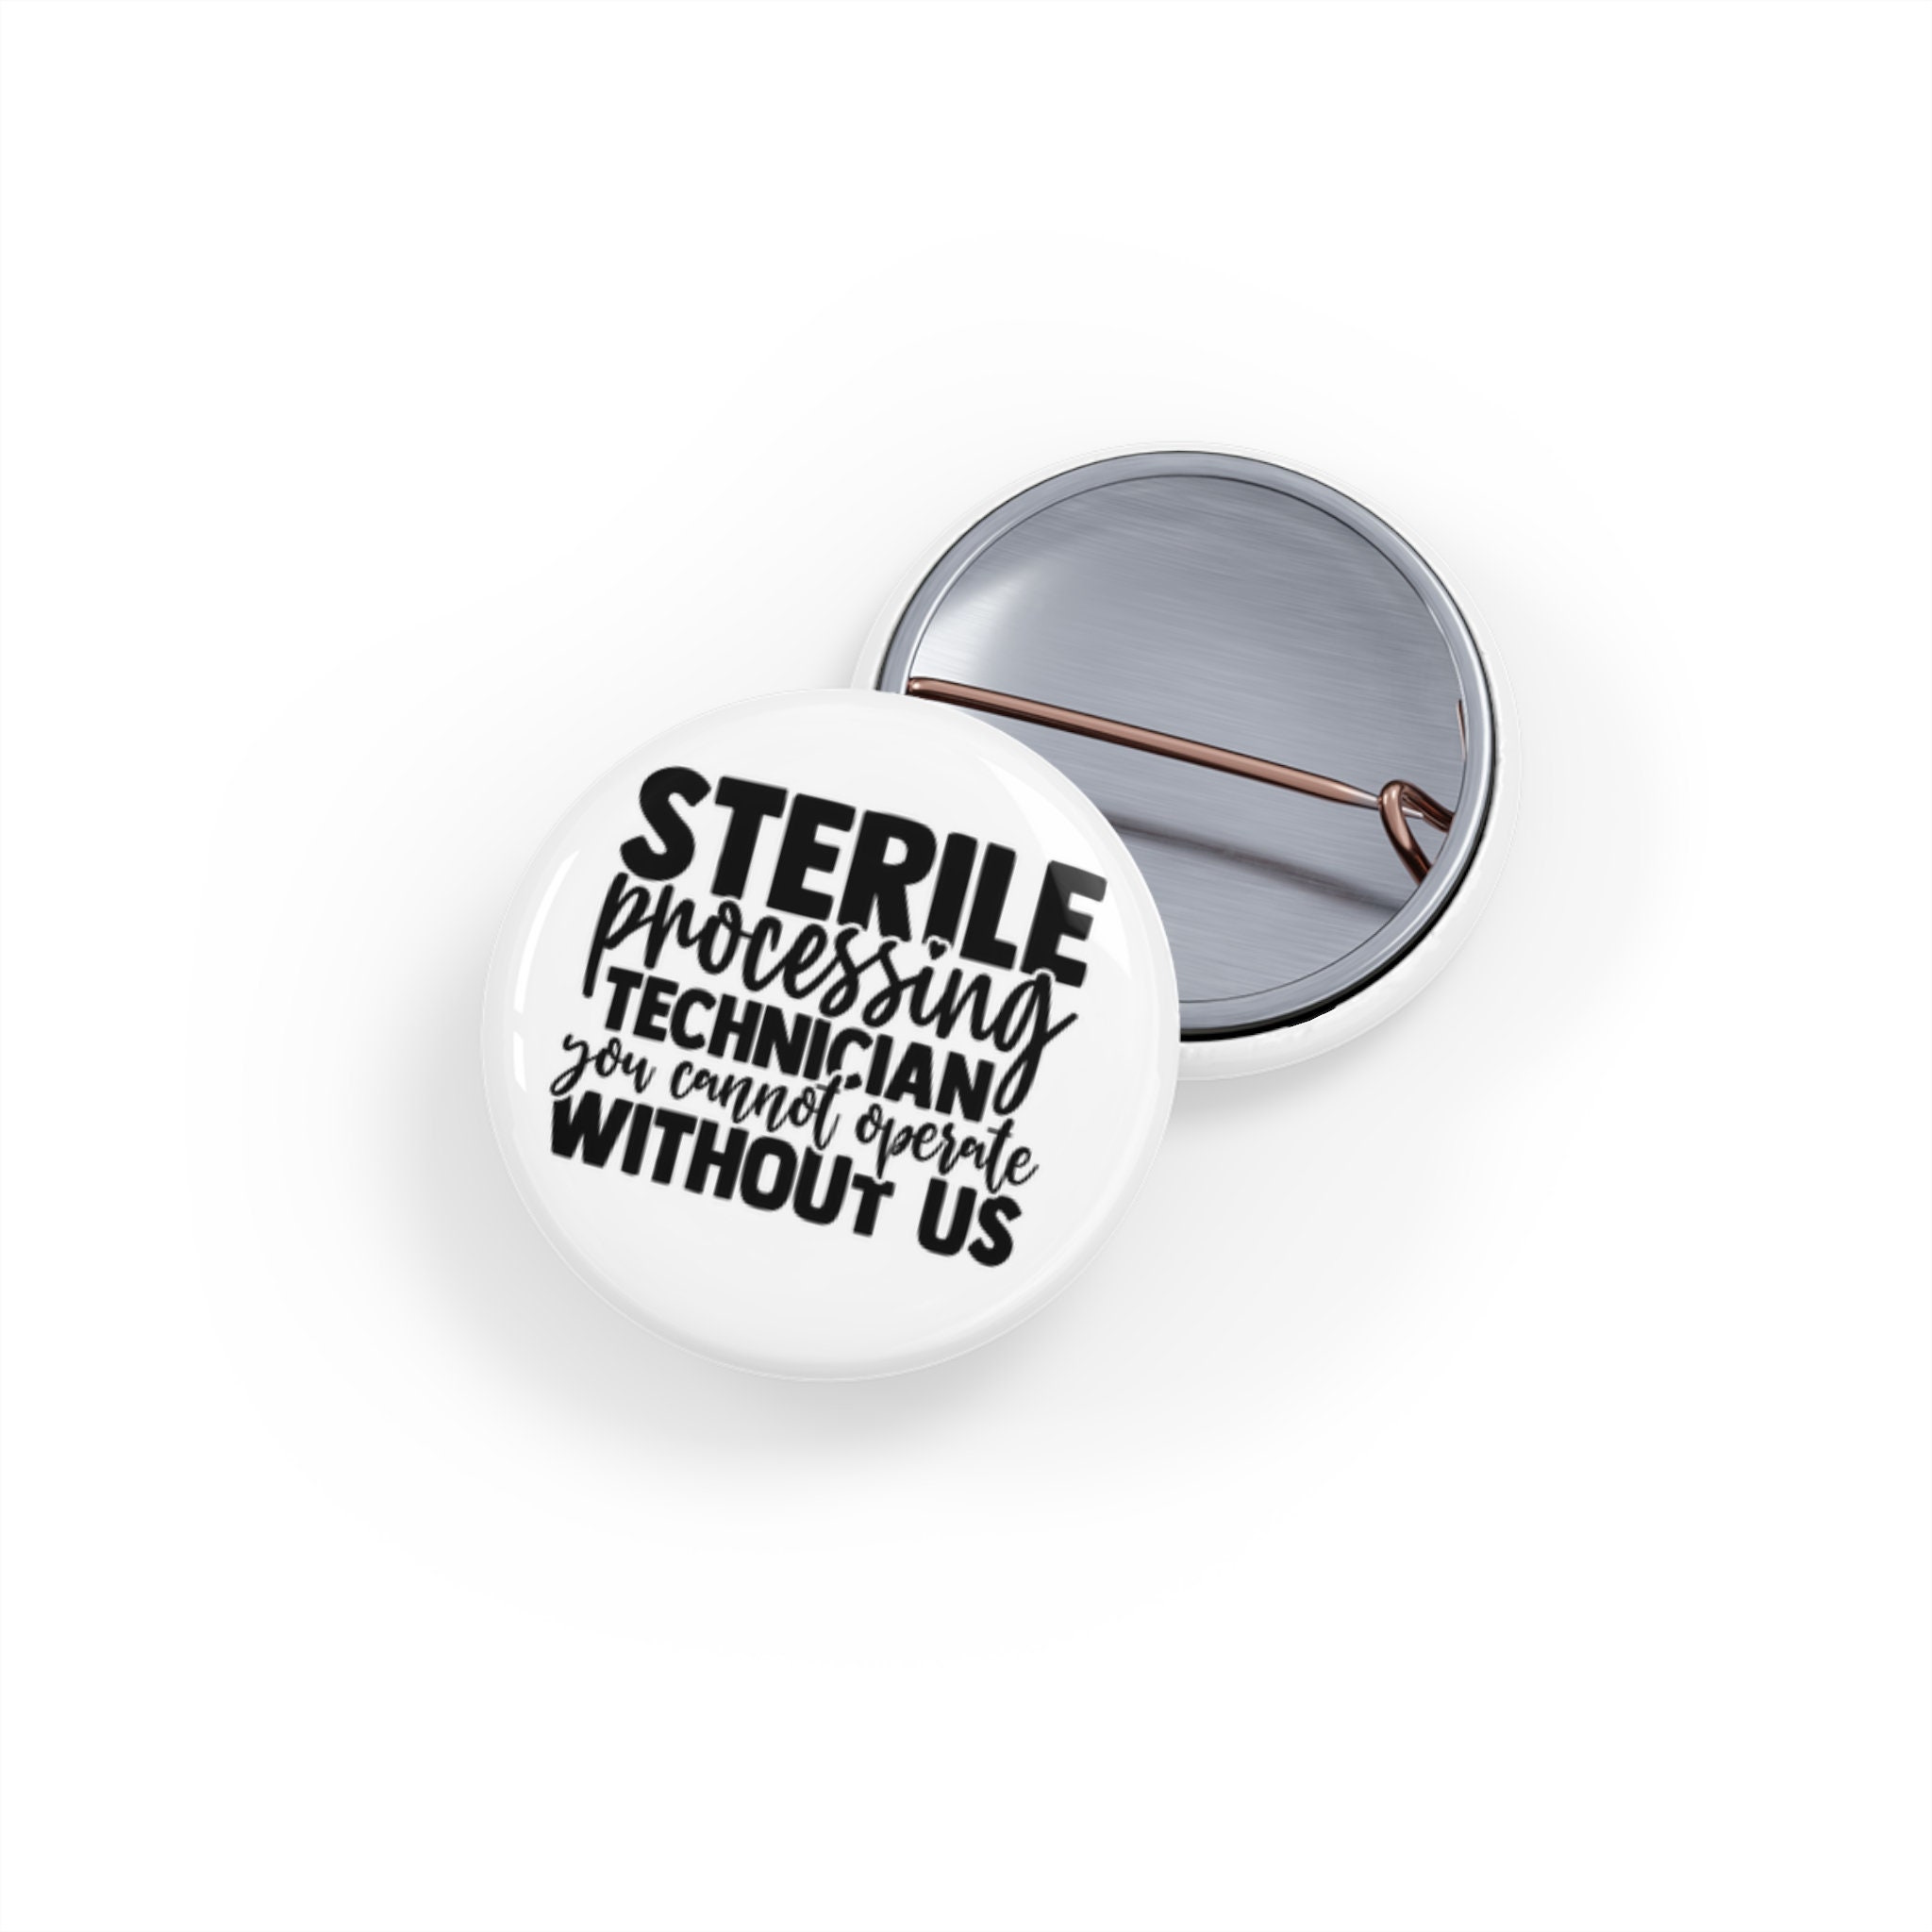 Sterile Processing Technician Badge Reel 